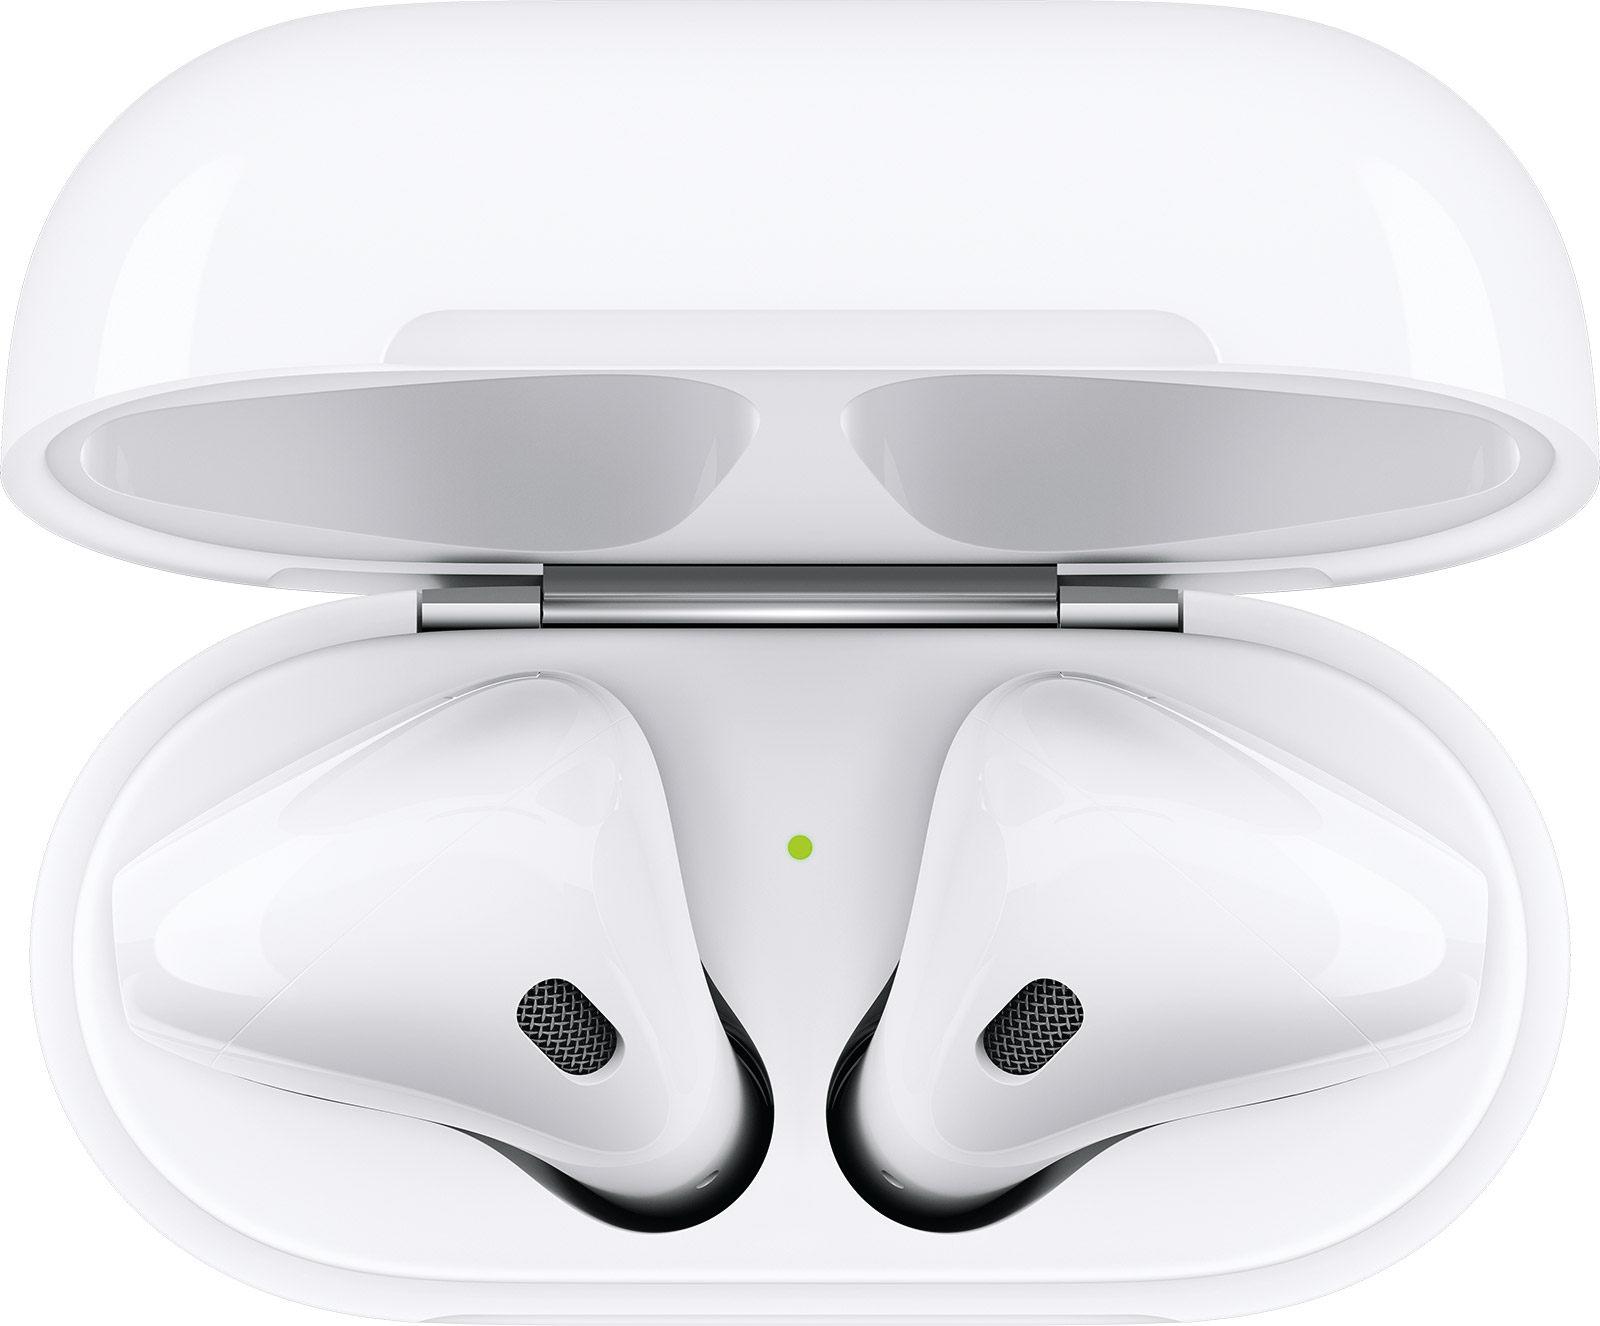 DEMO-AirPods-mit-Ladecase-Bluetooth-In-Ear-Kopfhoerer-Apple-2019-02.jpg